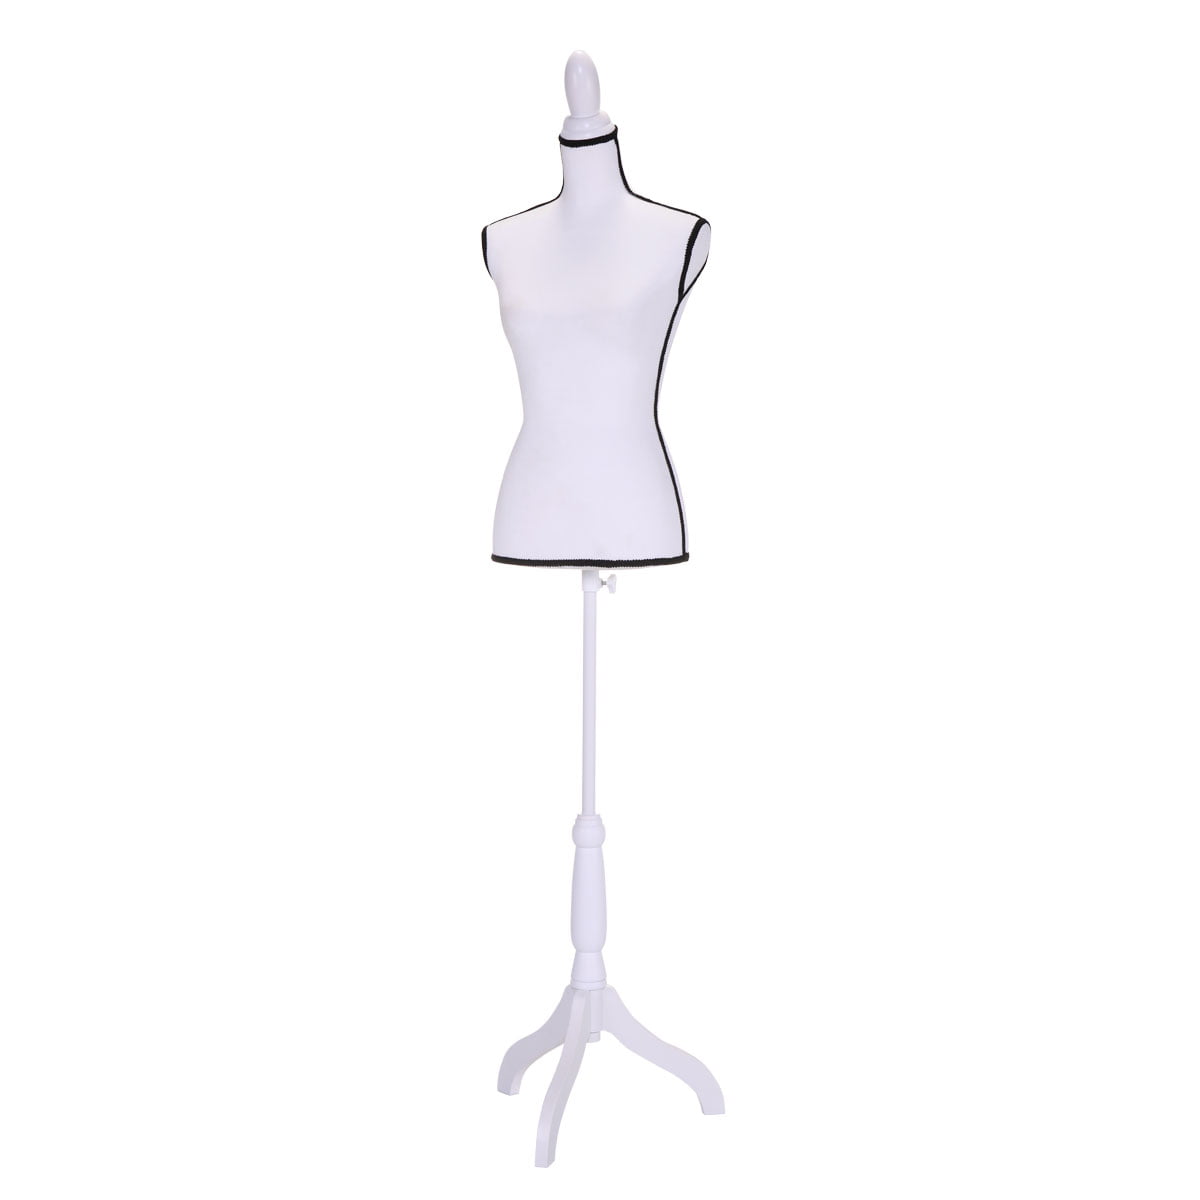 Details about   Adult Female Plus Size Adjustable Dress Form Sewing Fabric Mannequin Torso